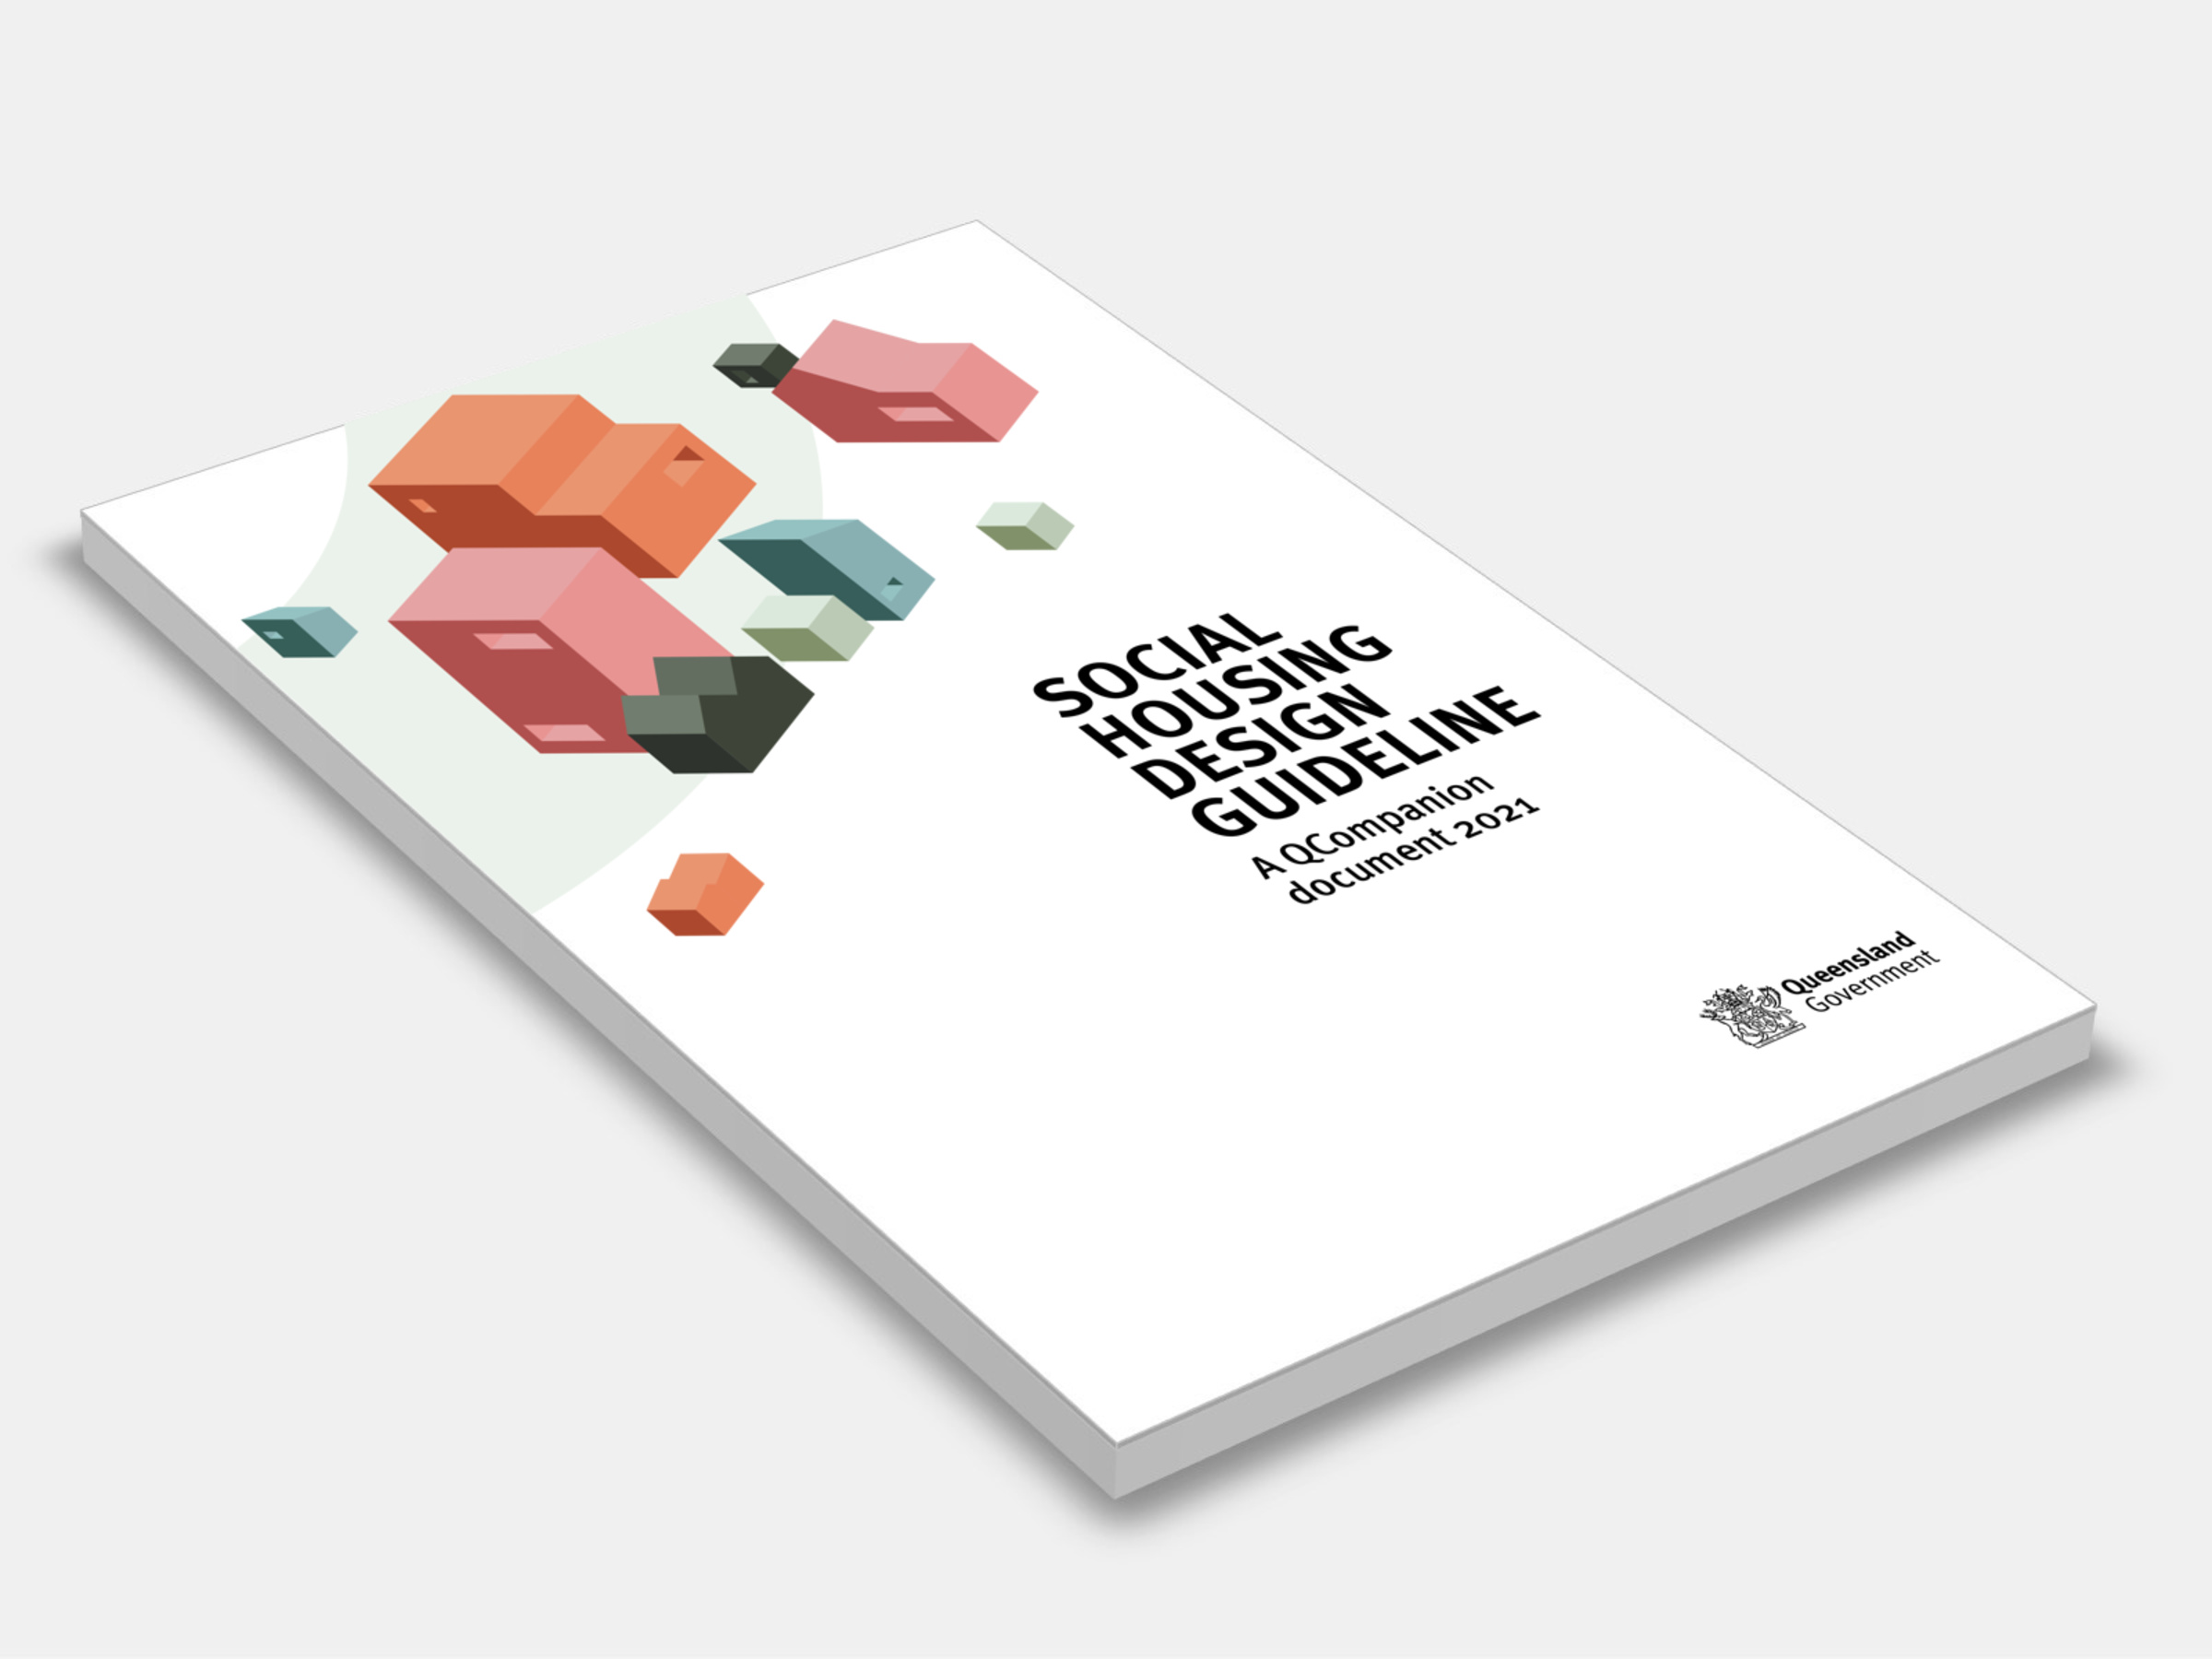 Social Housing Design Guideline: A QCompanion document 2021 cover